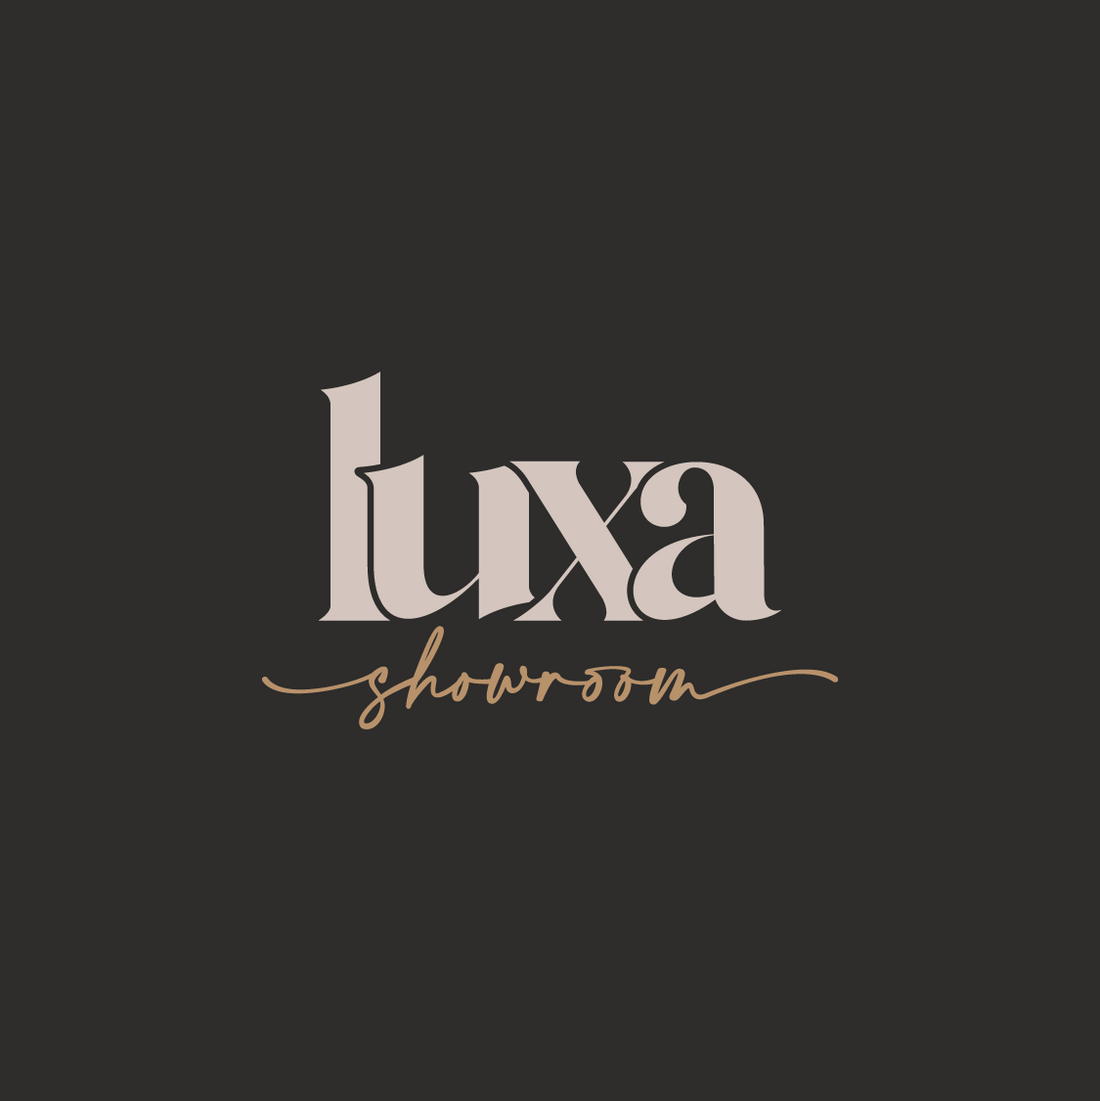 luxa showroom